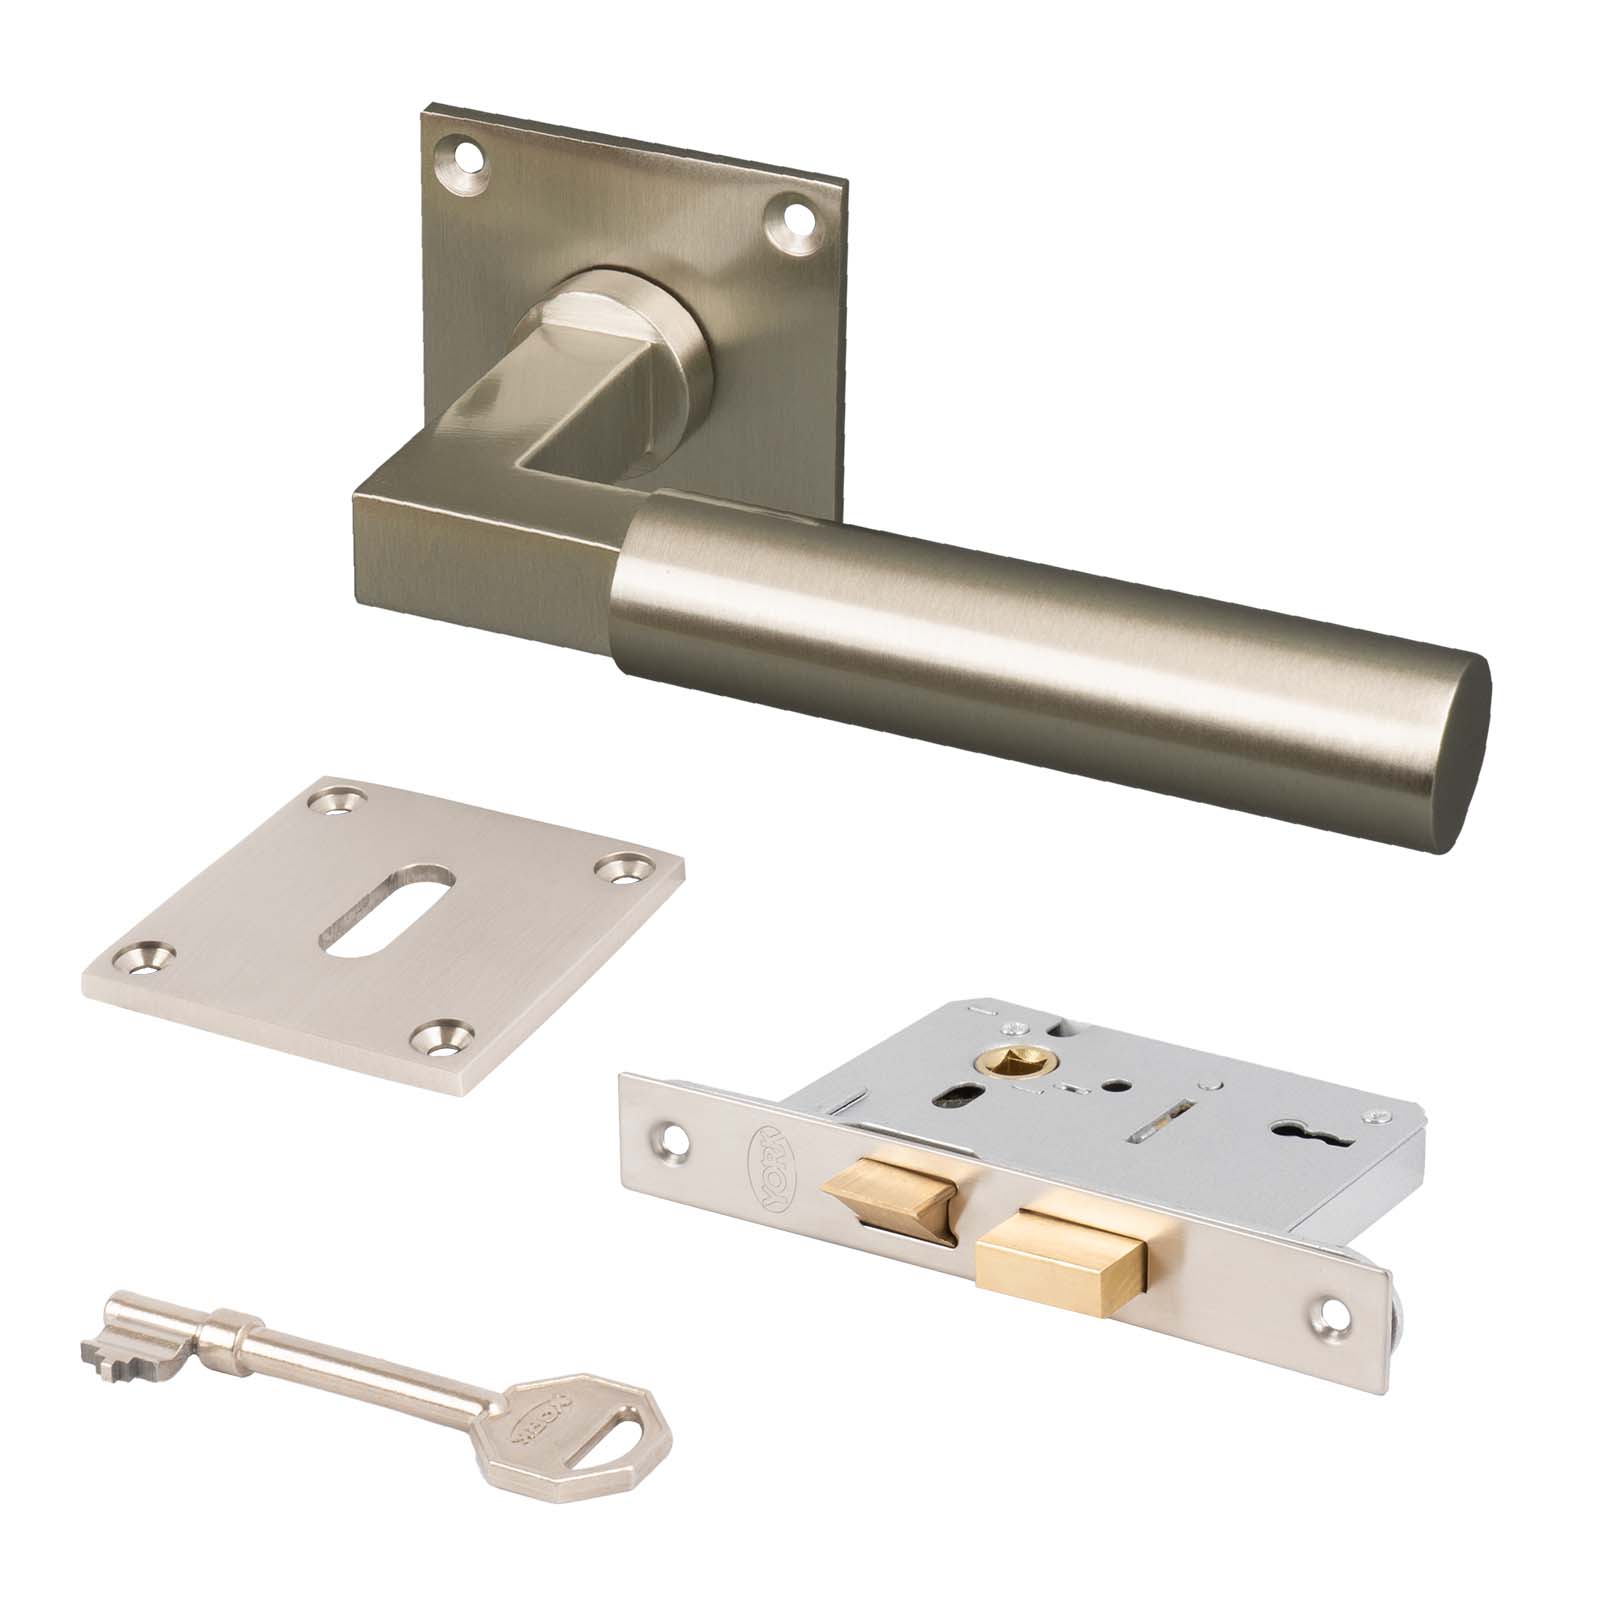 satin nickel Bauhaus handles with square low profile plate, 3 lever sash lock set